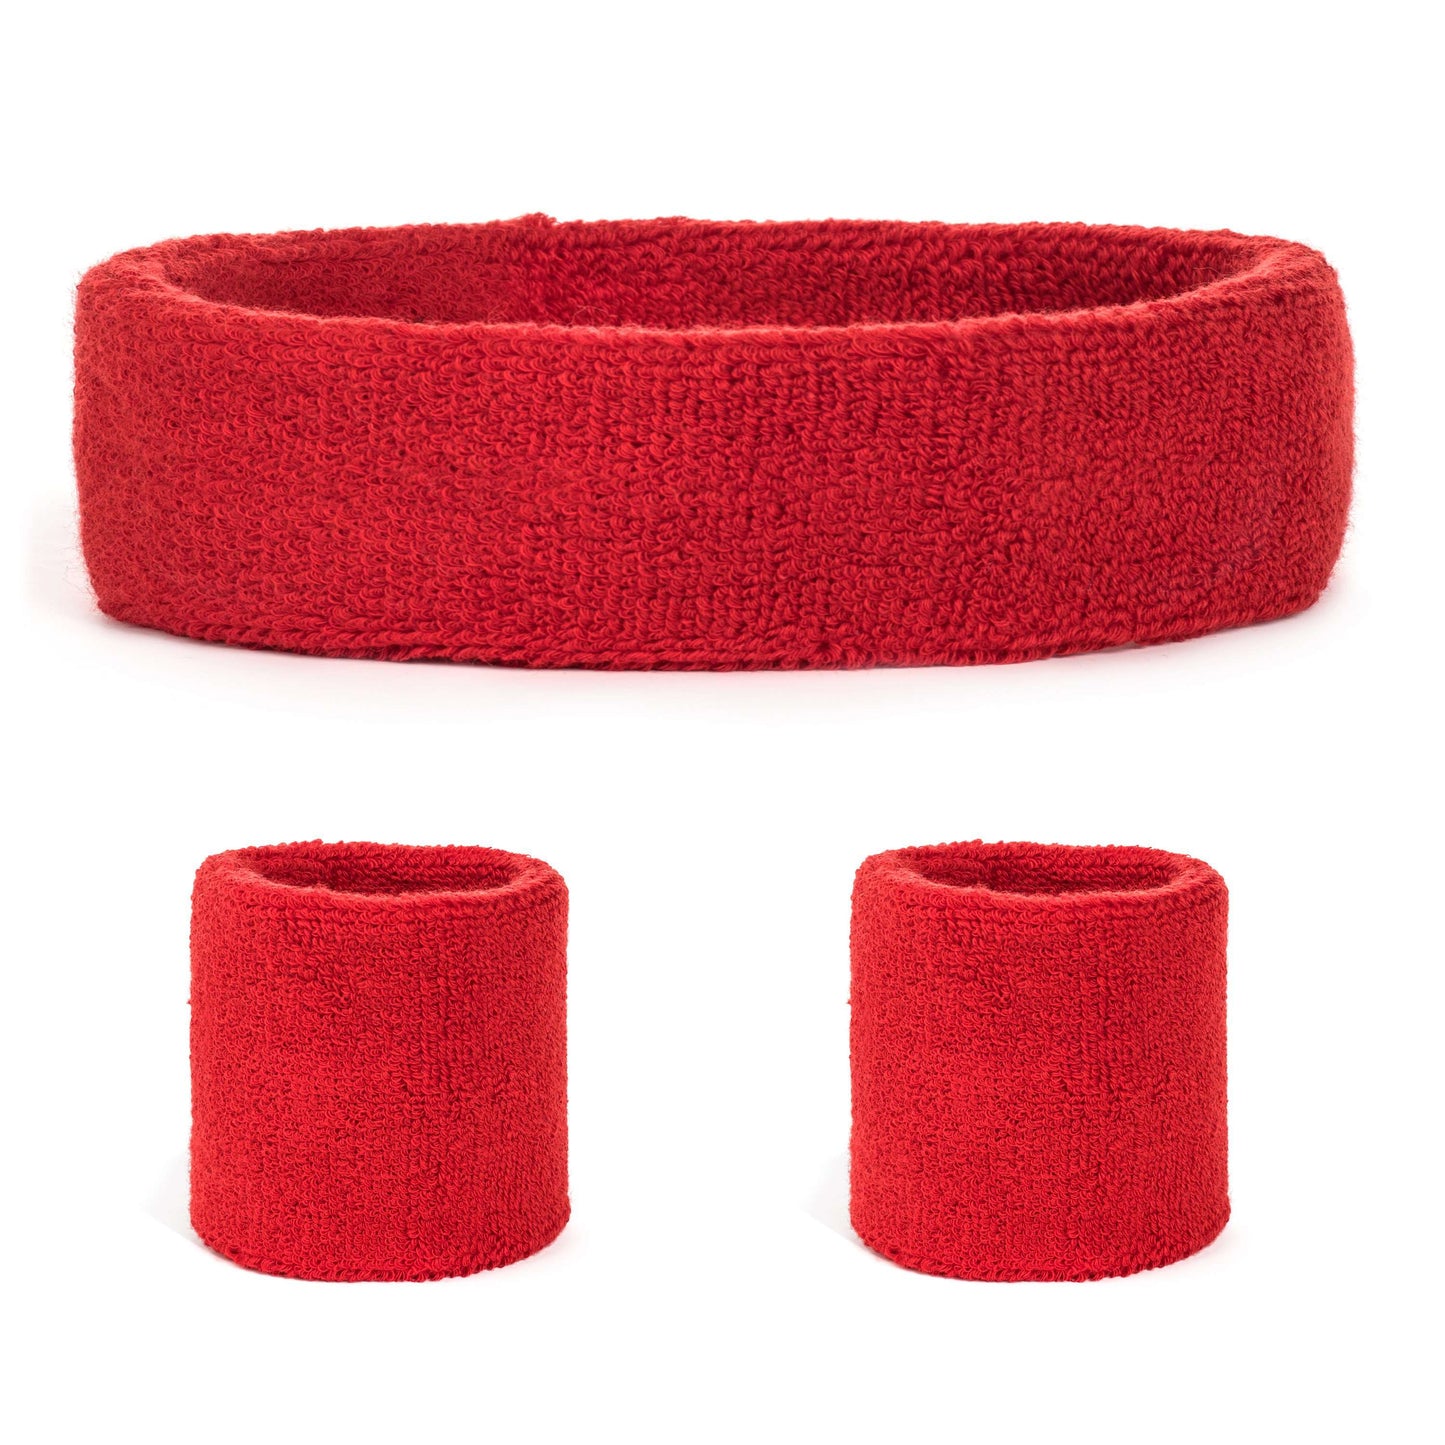 Suddora Sweatband Set (1 Headband & 2 Wristbands) - Red